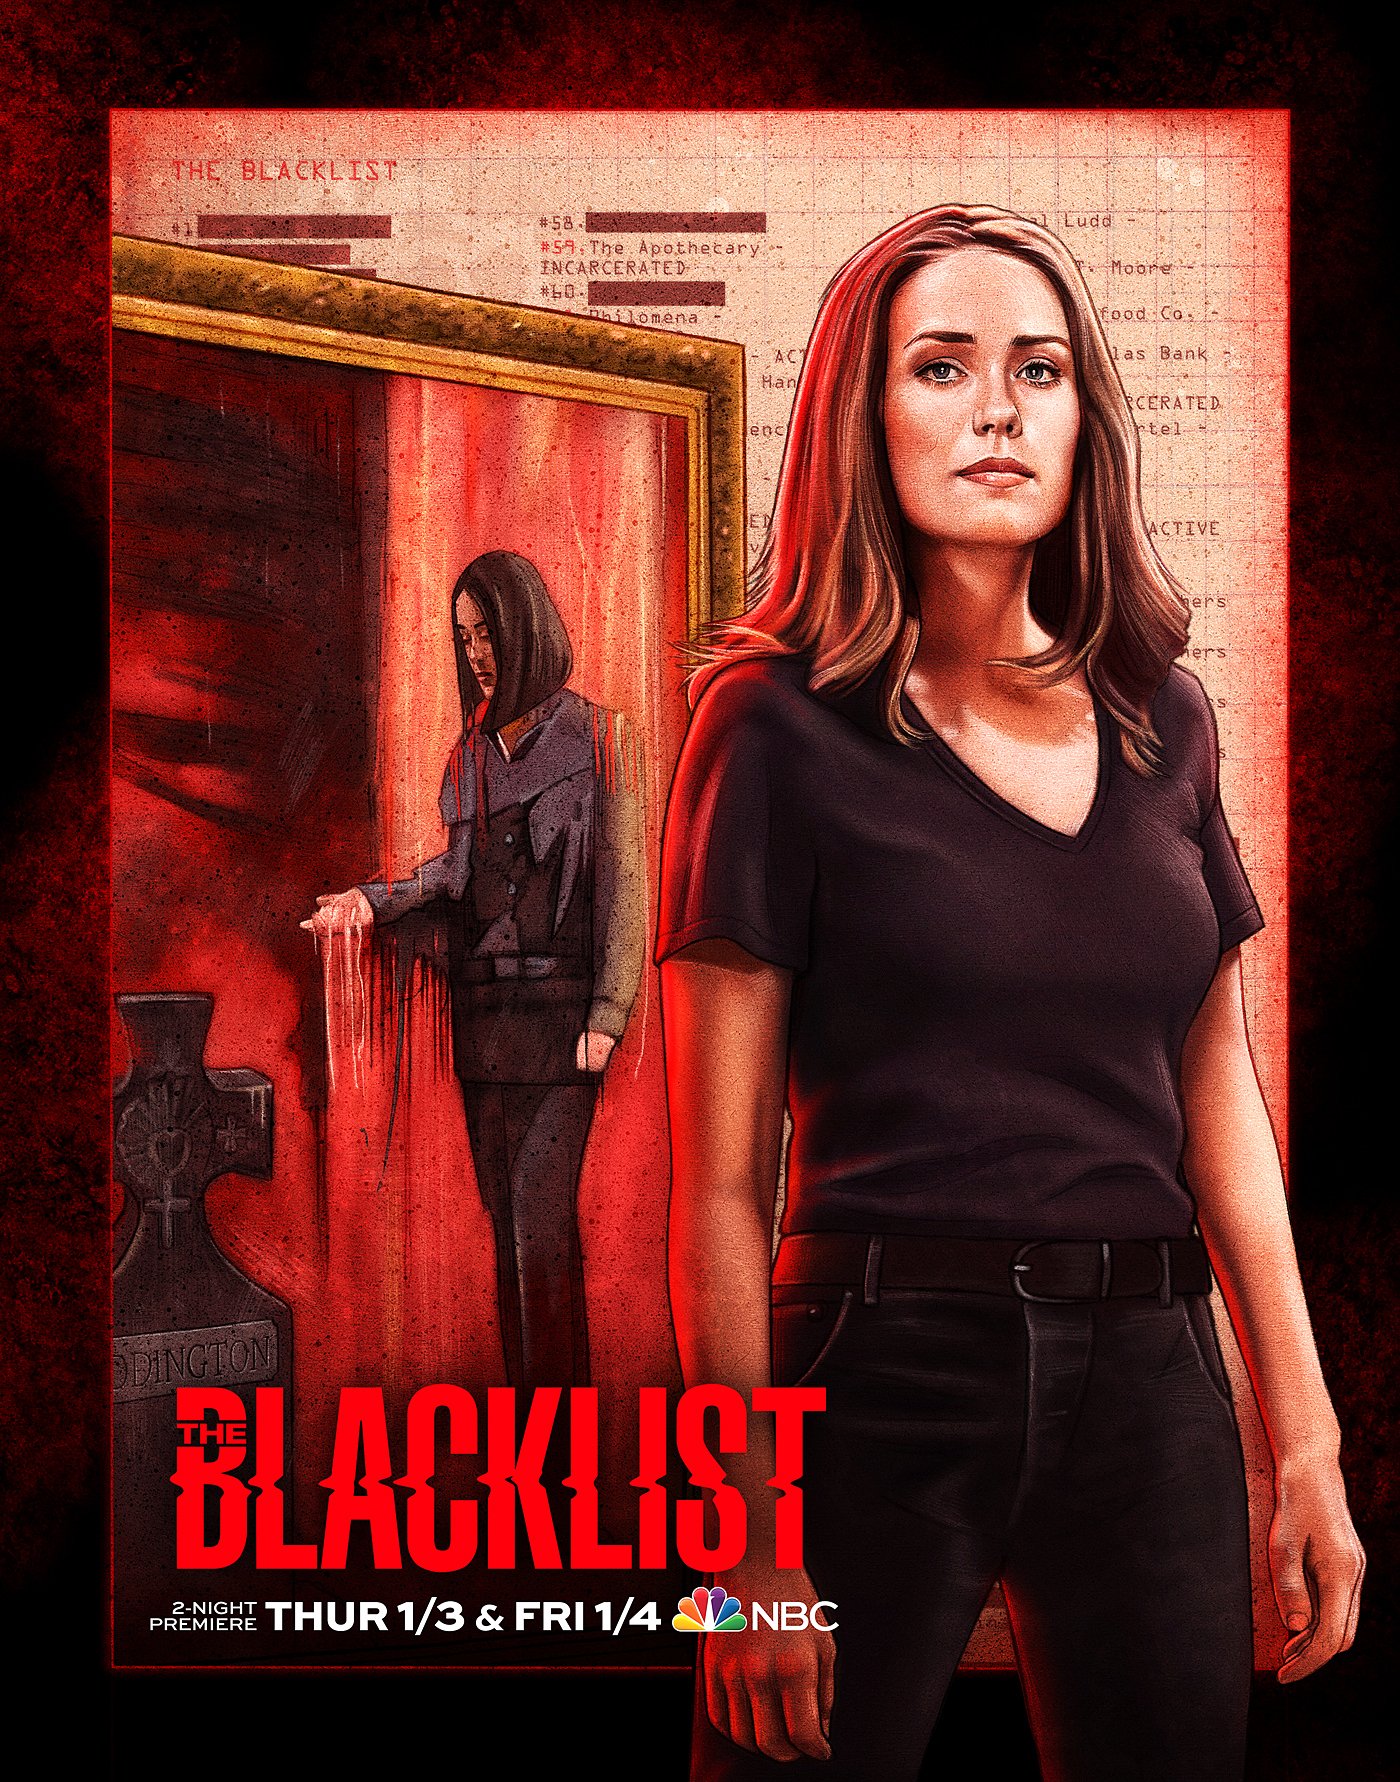 The Blacklist Season 6 Poster - Elizabeth Keen by Kyle Lambert